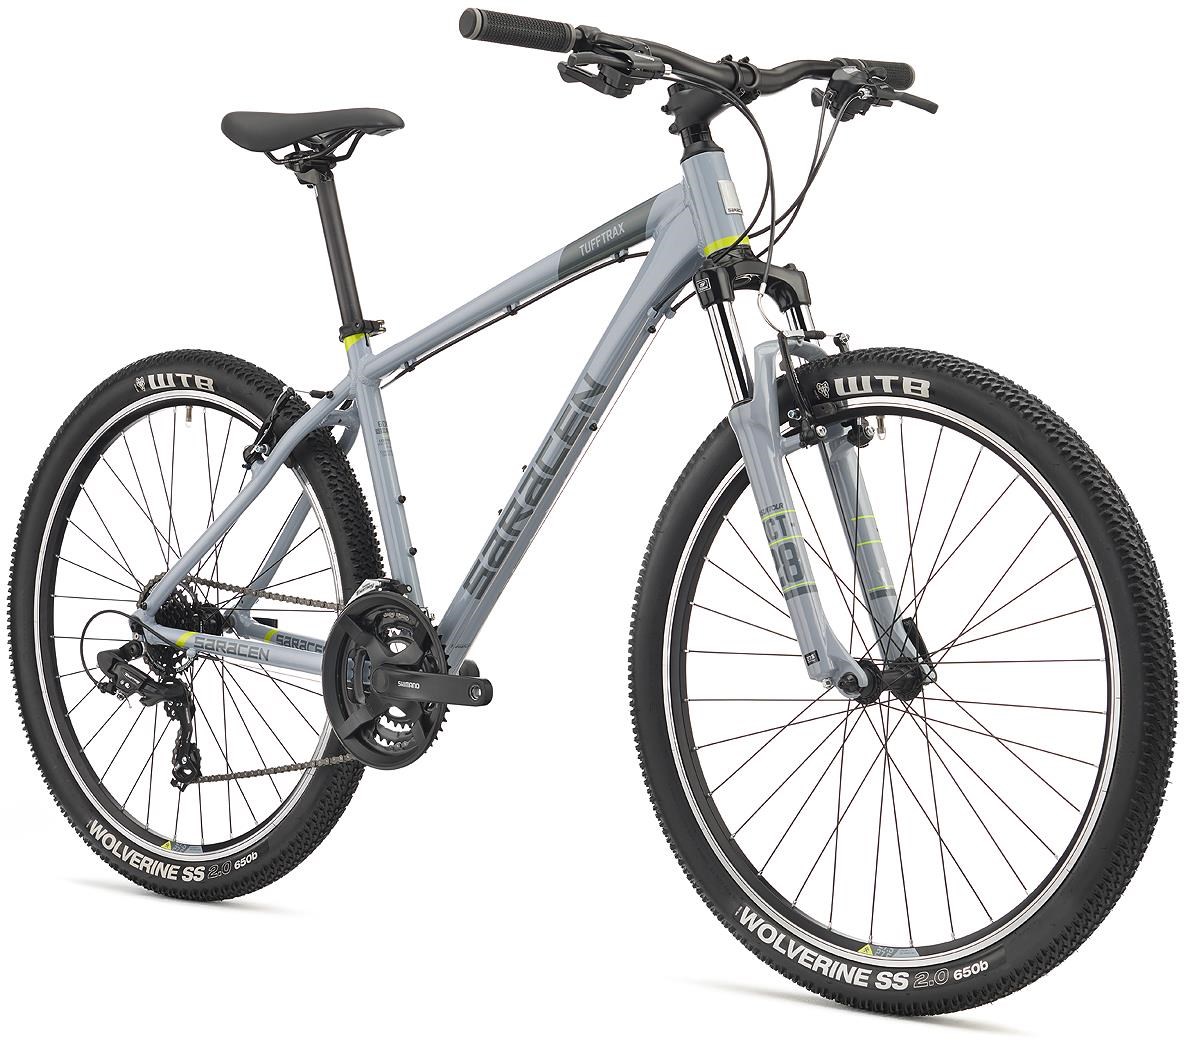 Saracen Tufftrax 27.5" Mountain Bike 2018 - Hardtail MTB product image